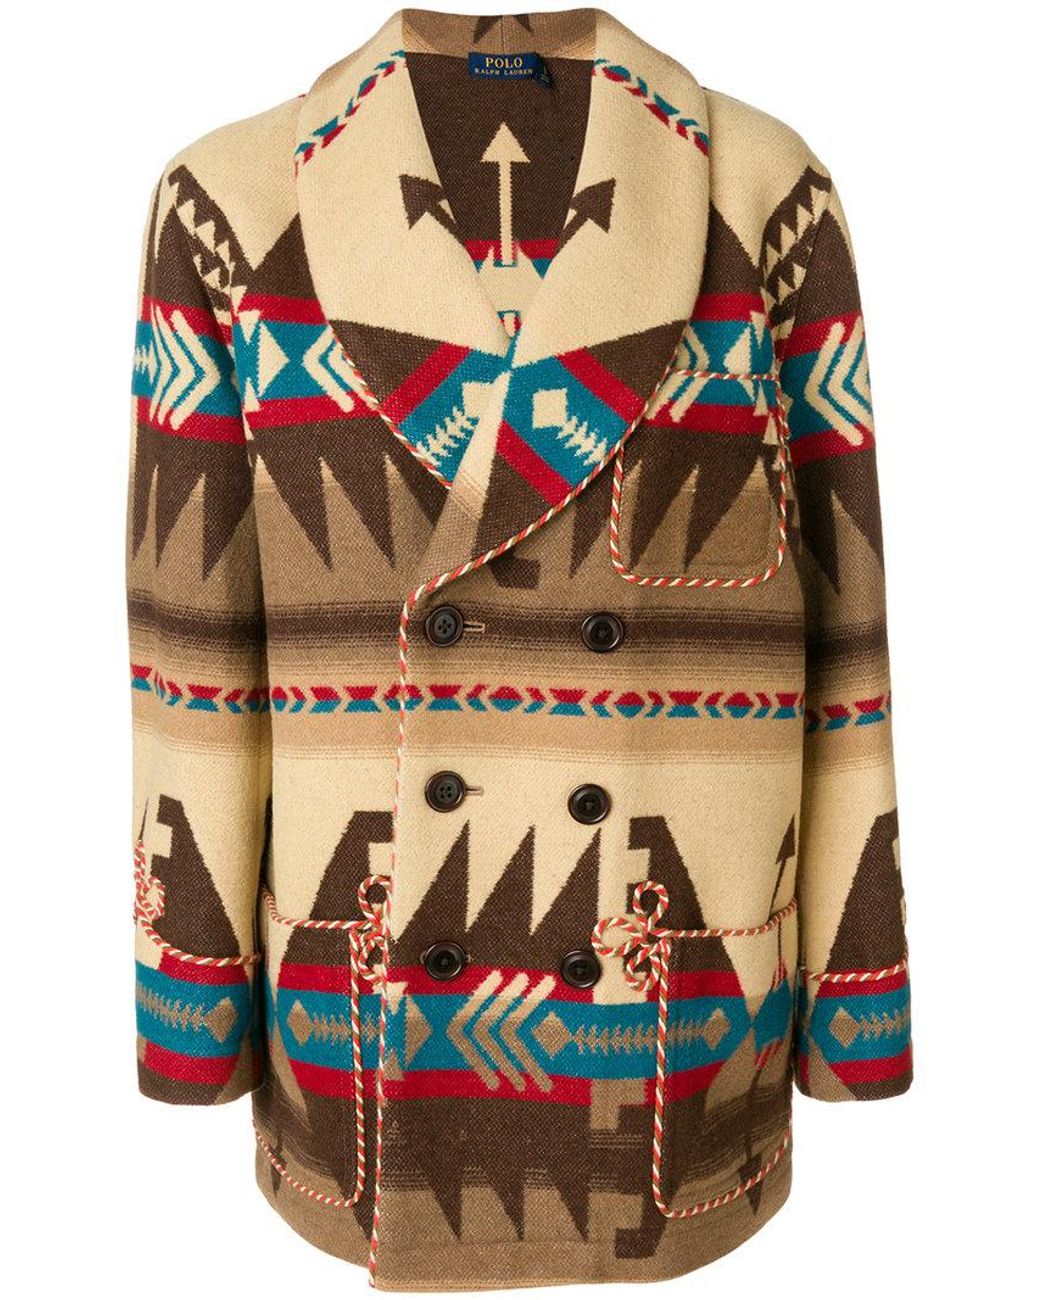 Polo Ralph Lauren Aztec Print Jacket | Lyst